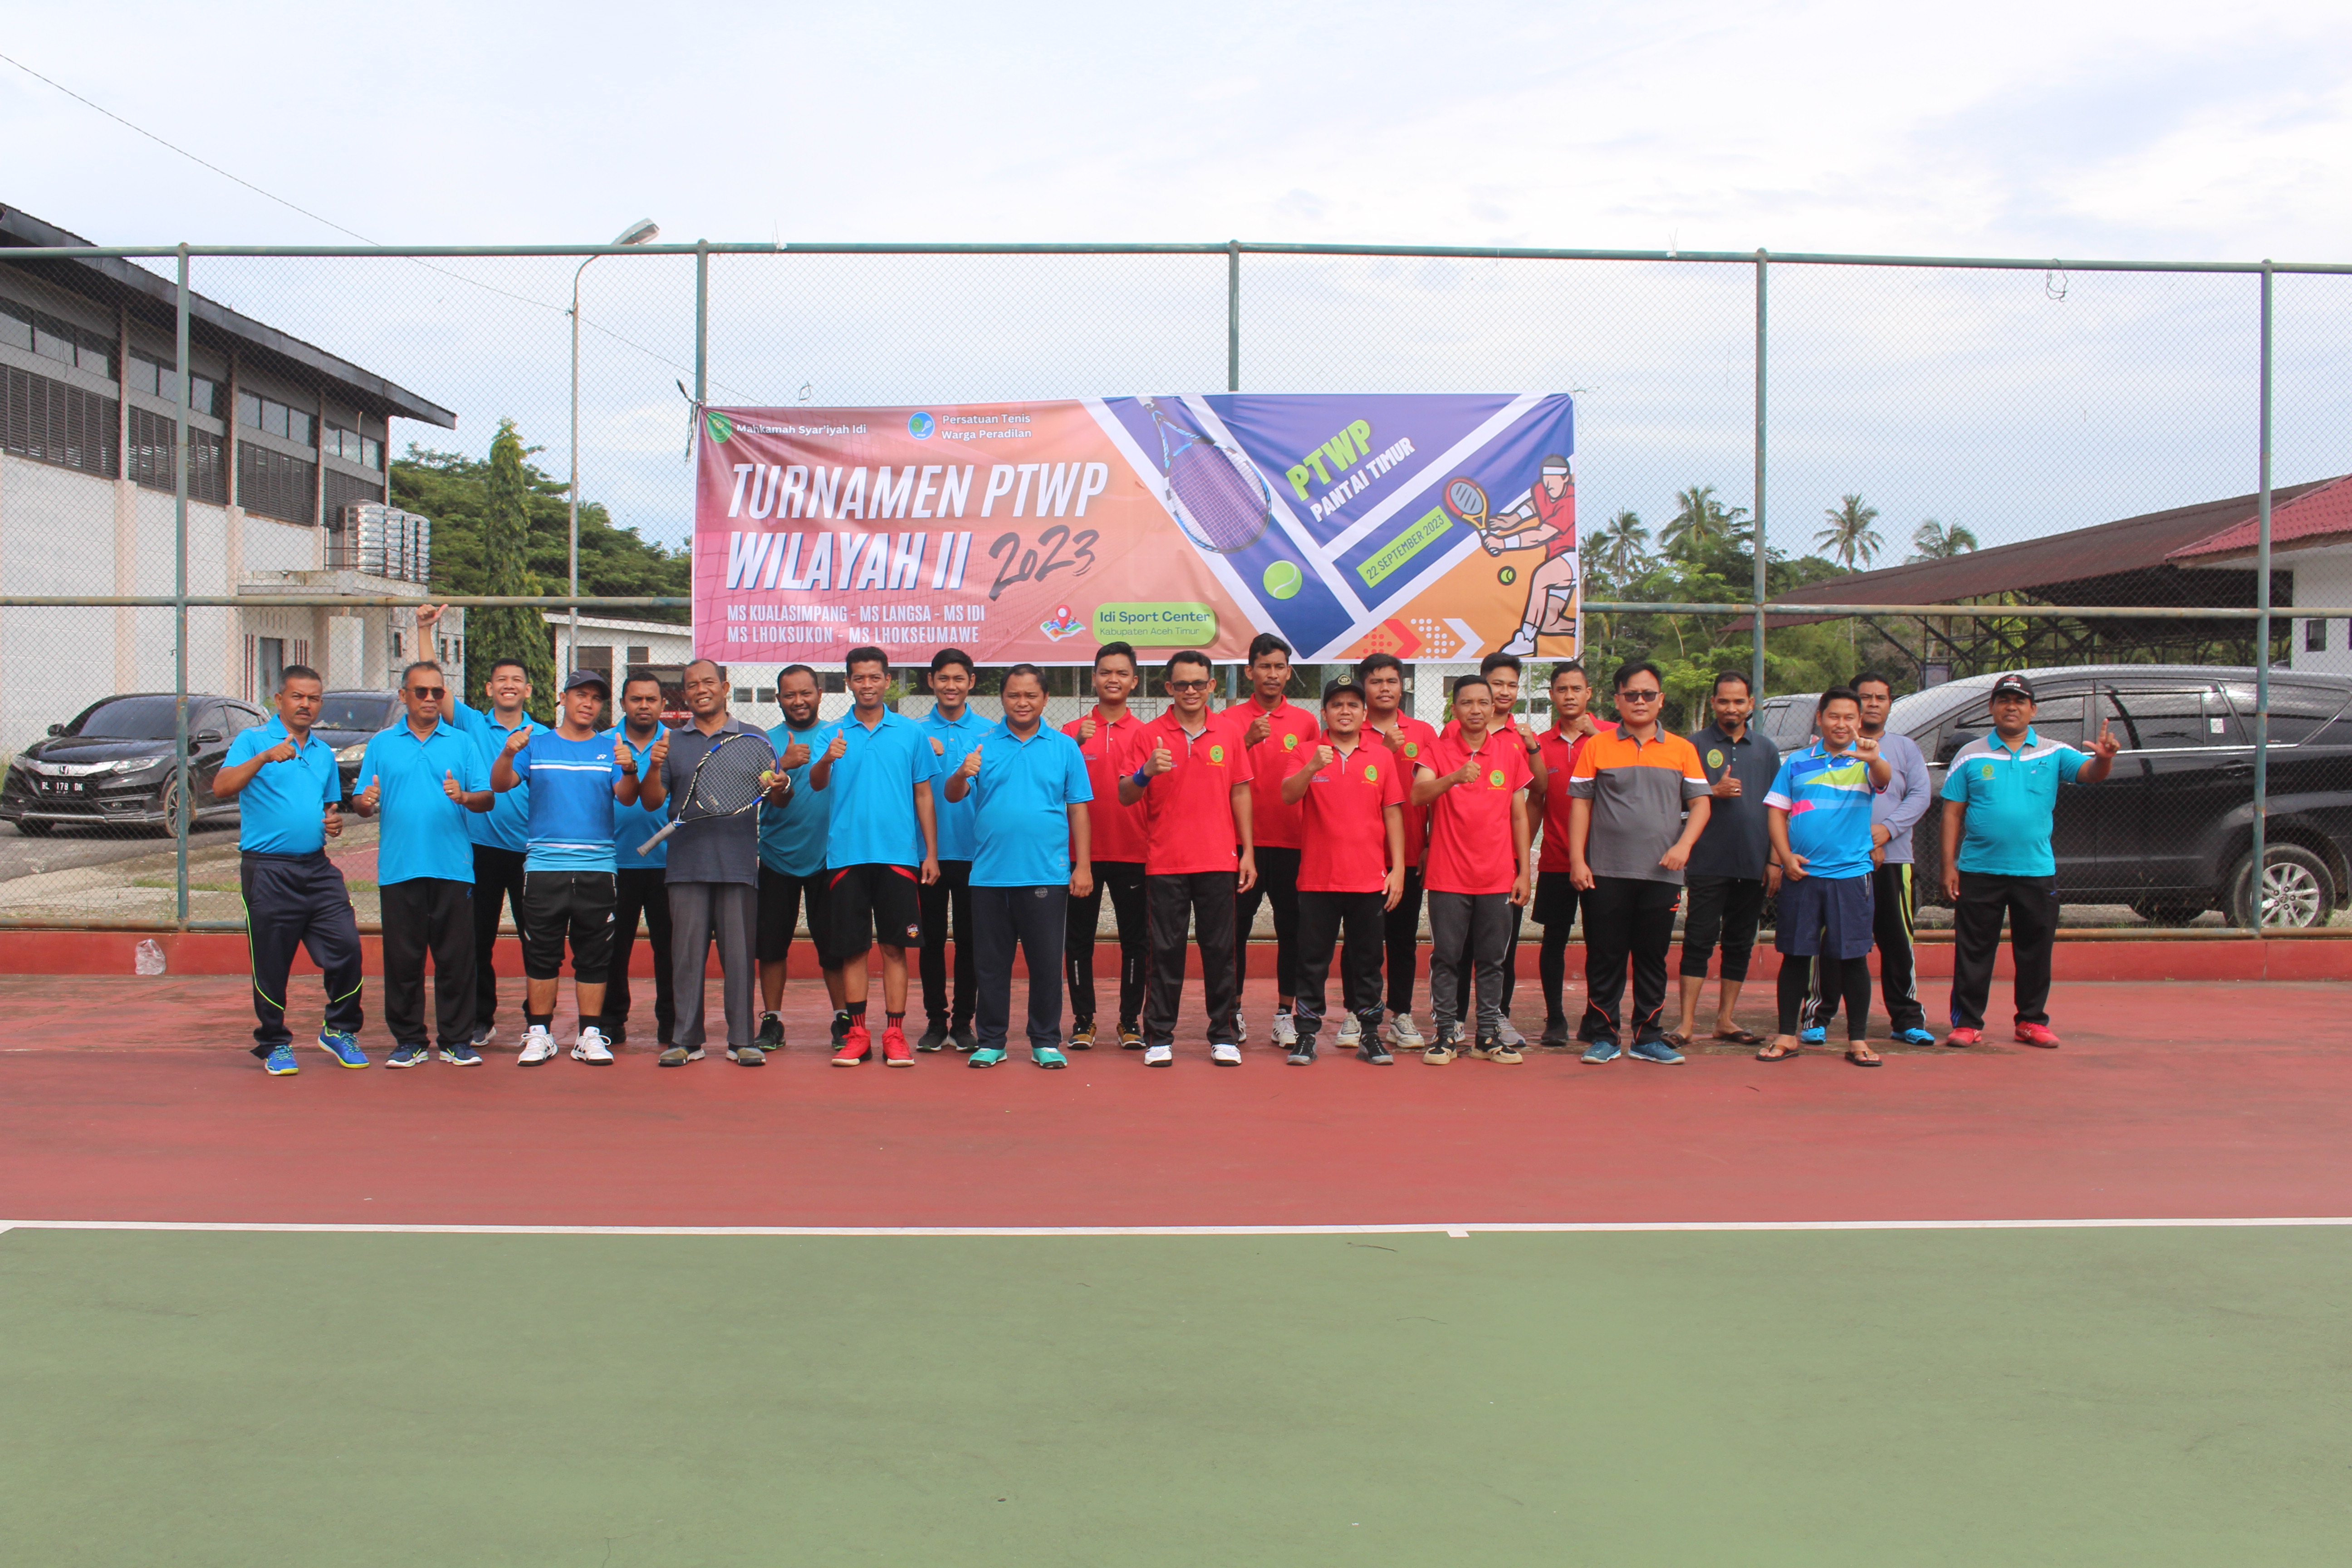 MS Idi Gelar Turnamen PTWP Wilayah Pantai Timur Aceh